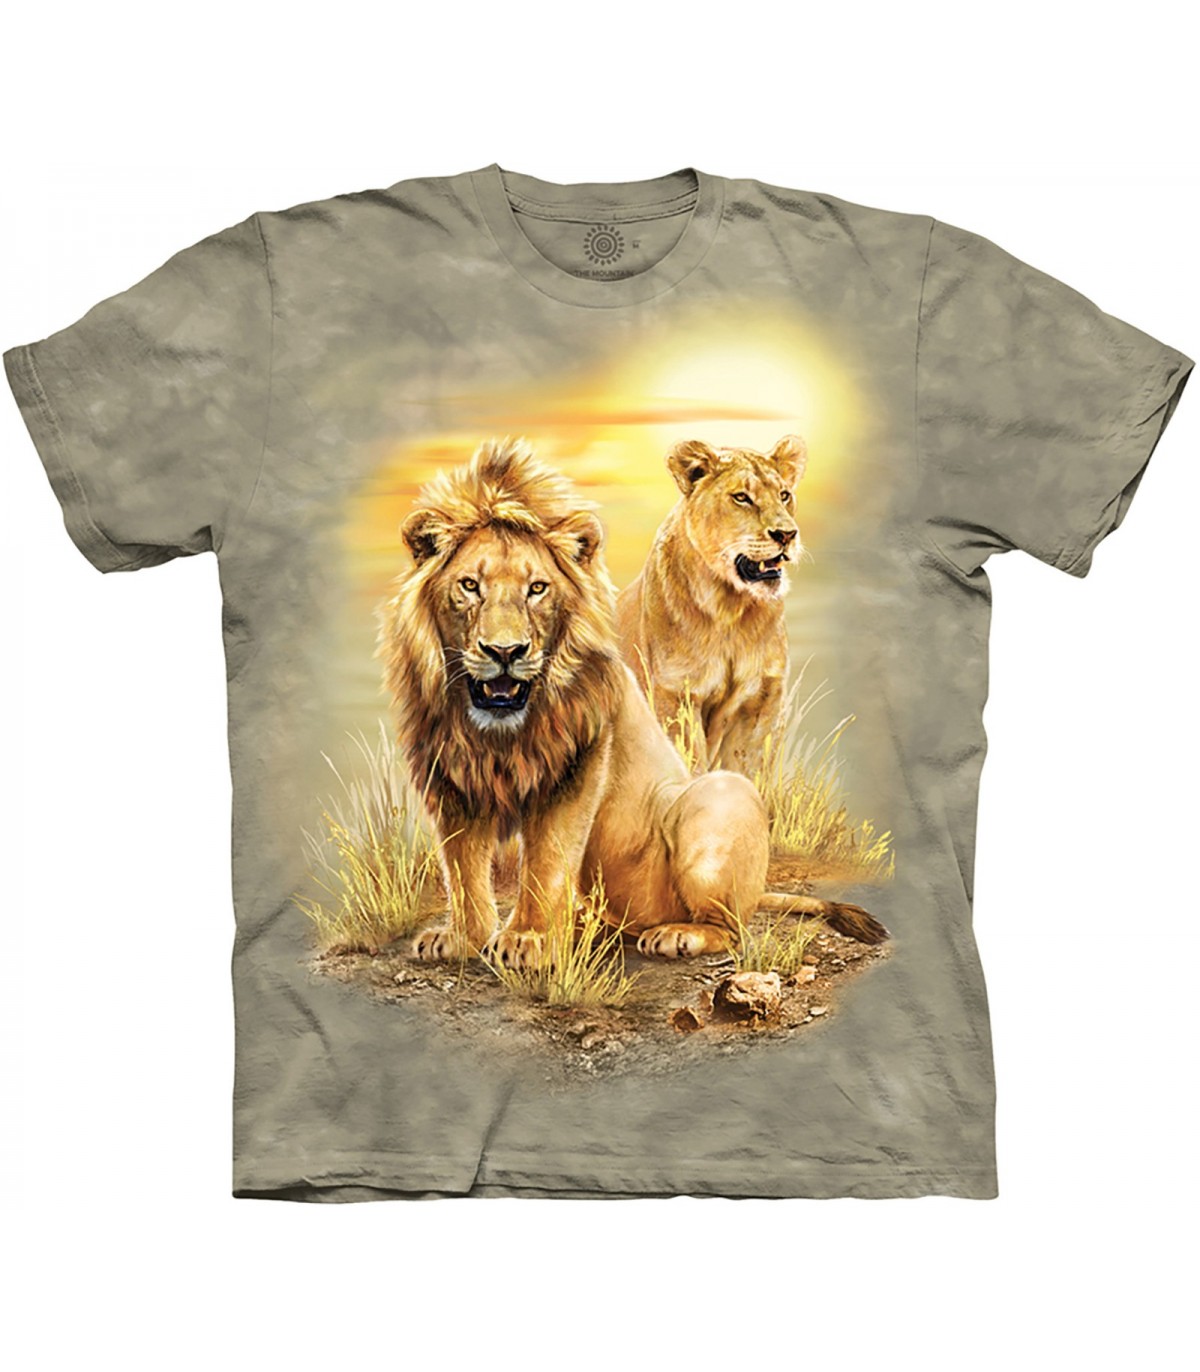 The Mountain Unisex Child Lion Pair Big Cat Animal T Shirt 